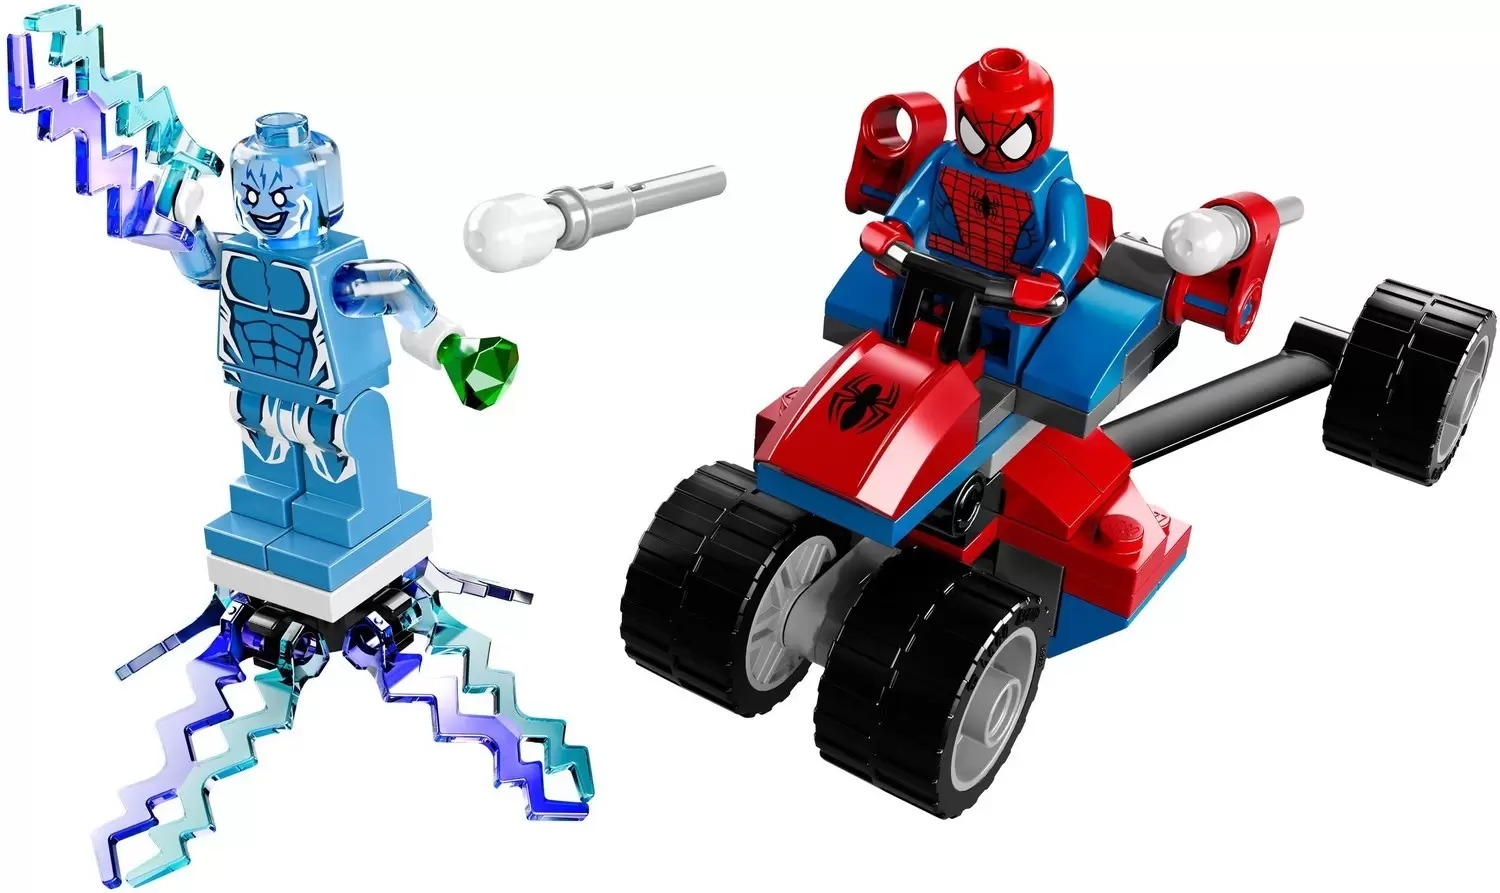 LEGO MARVEL Super Heroes - Spider-Trike vs. Electro